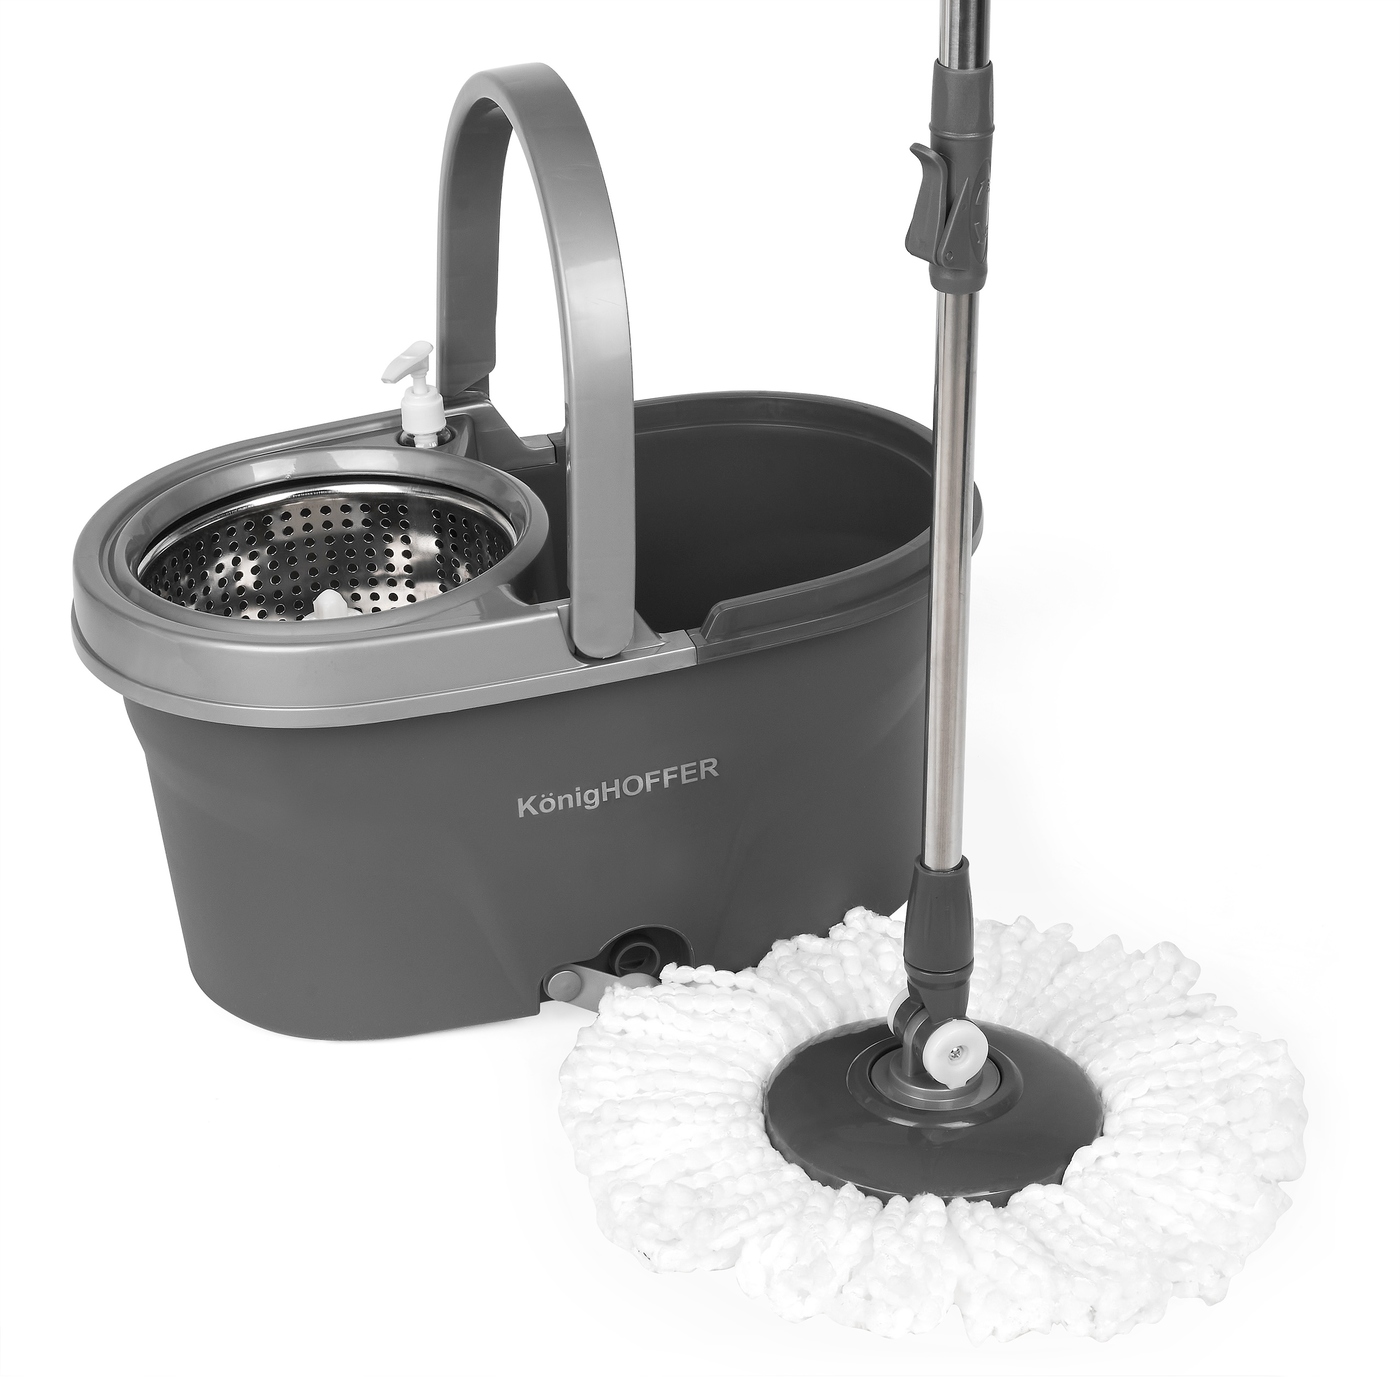 KönigHOFFER Mop rotační Clean It profesional